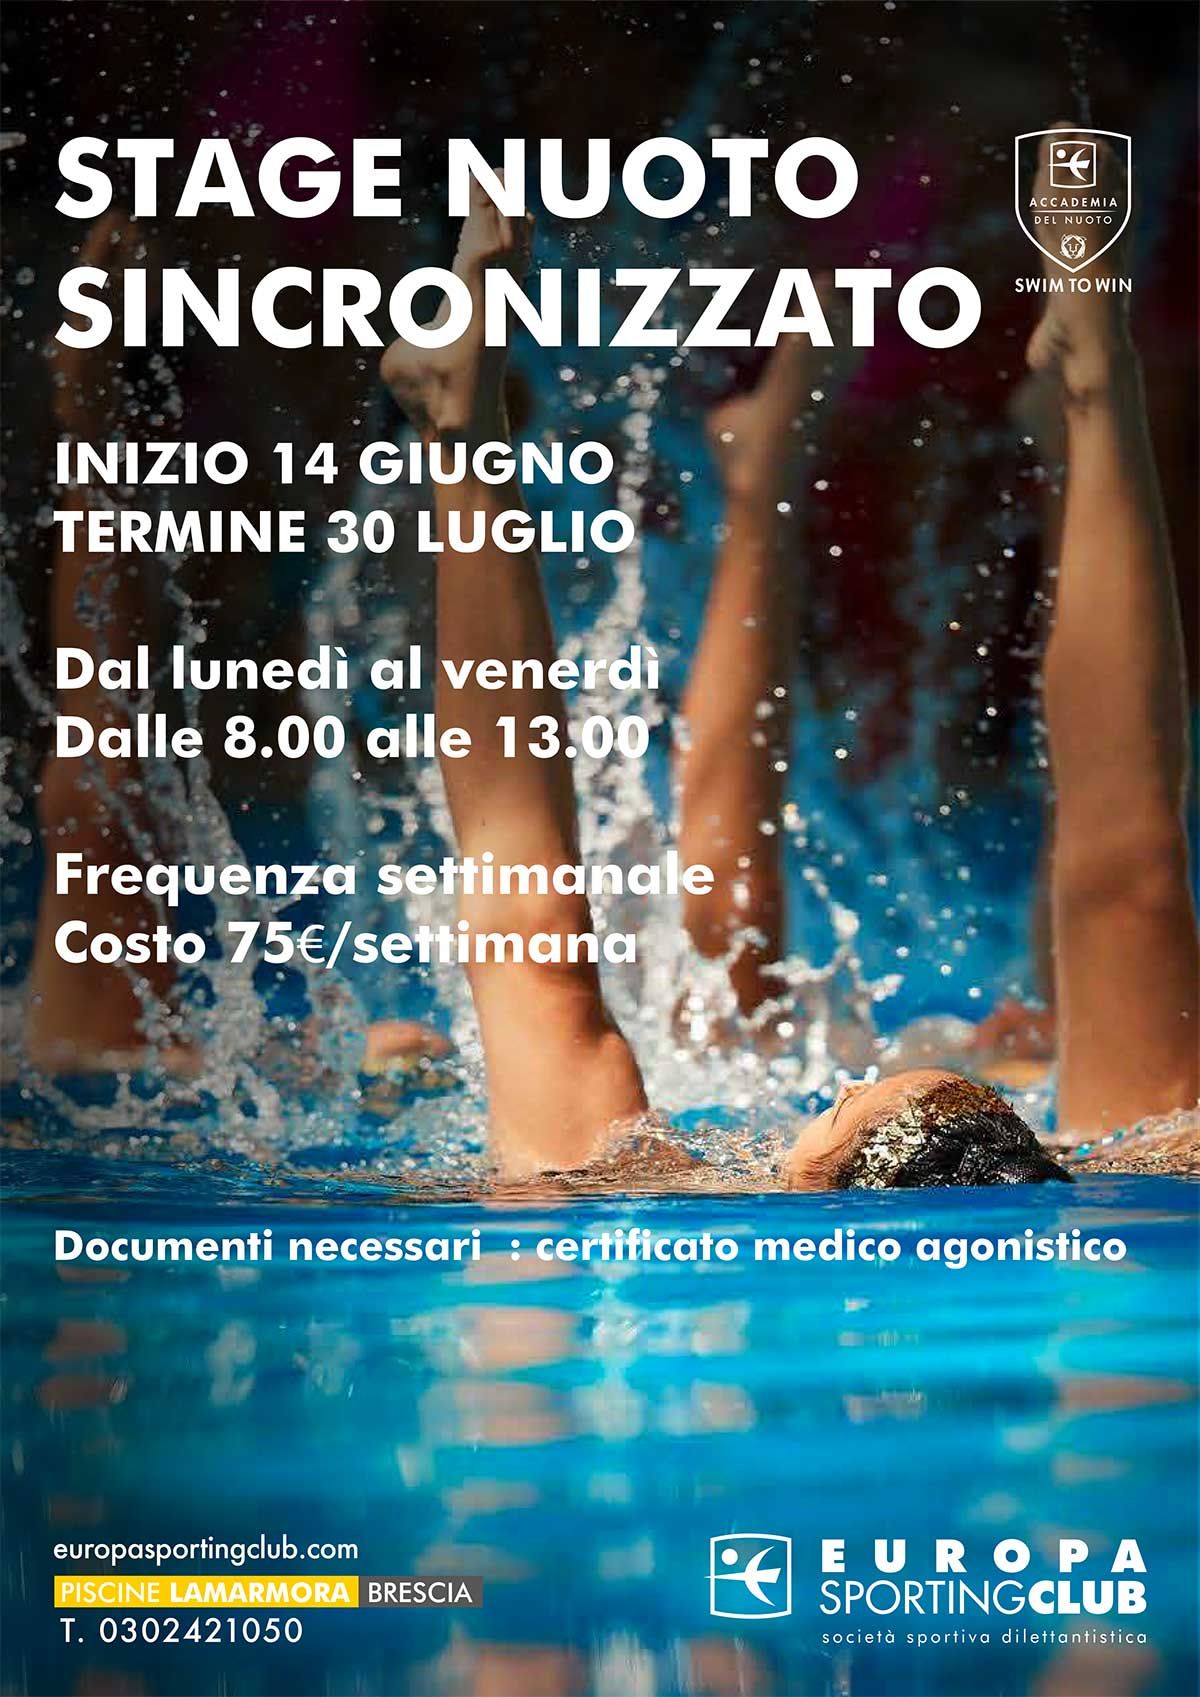 Stage_nuoto_sincronizzato_2021-europa-sporting-club-2021